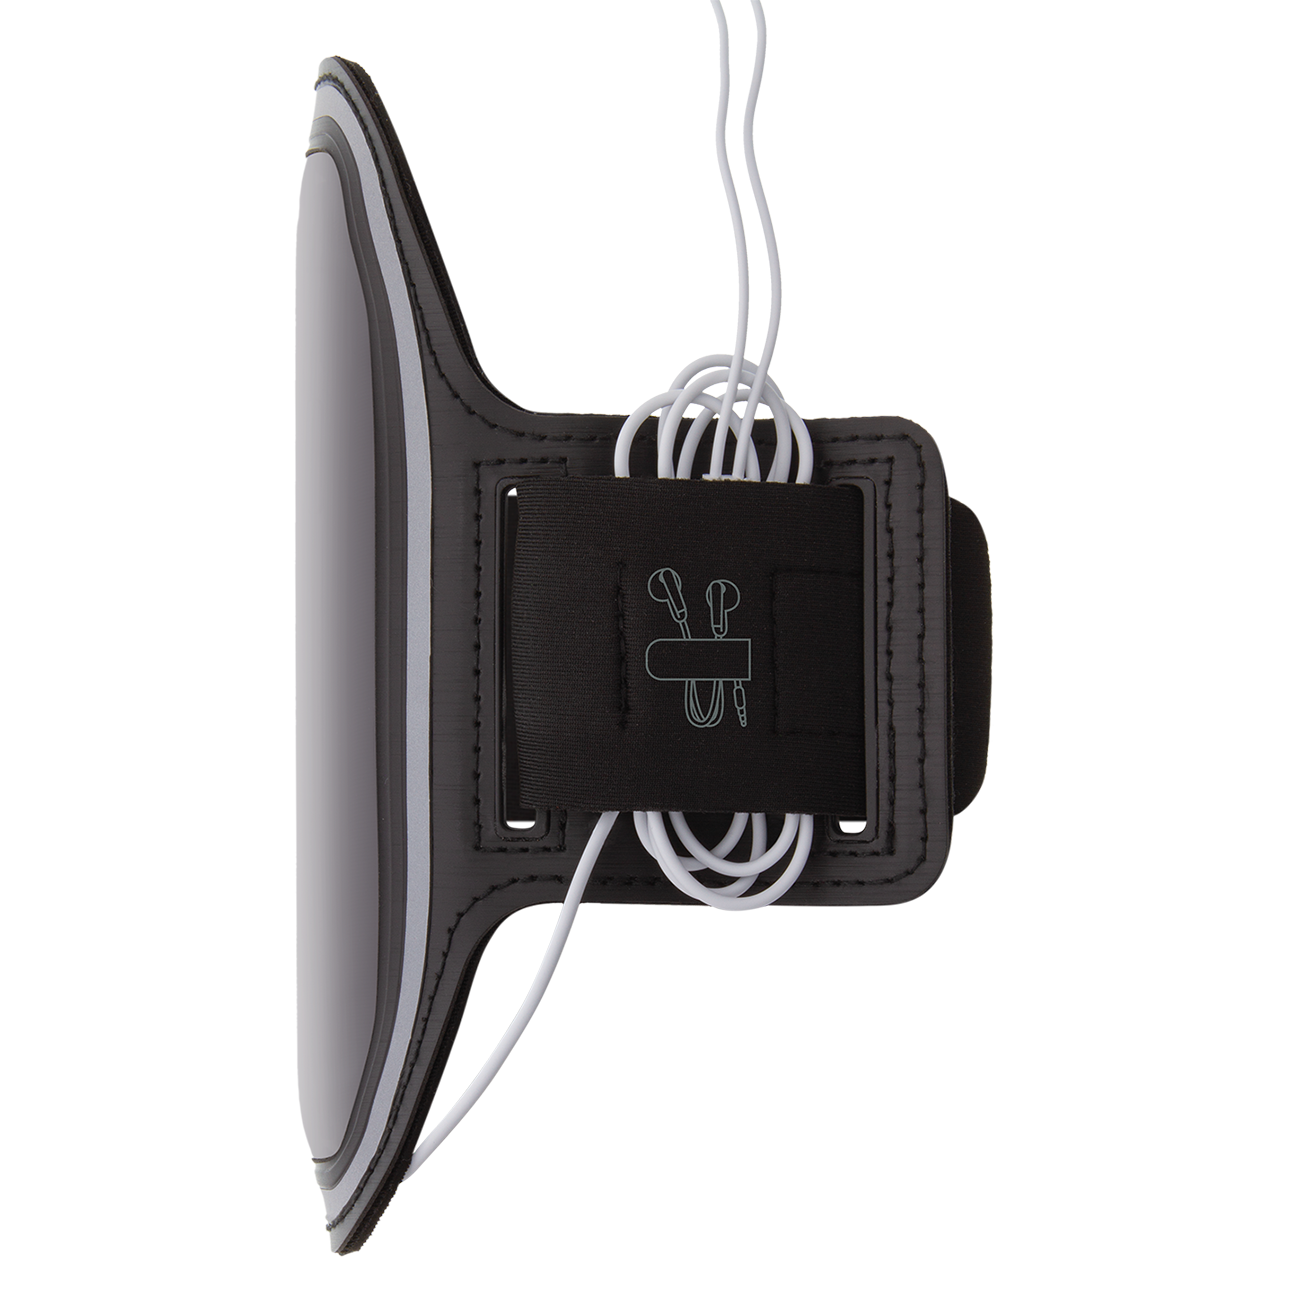 STREETZ Sportarmband med reflexer, 6.5 tum smartphones